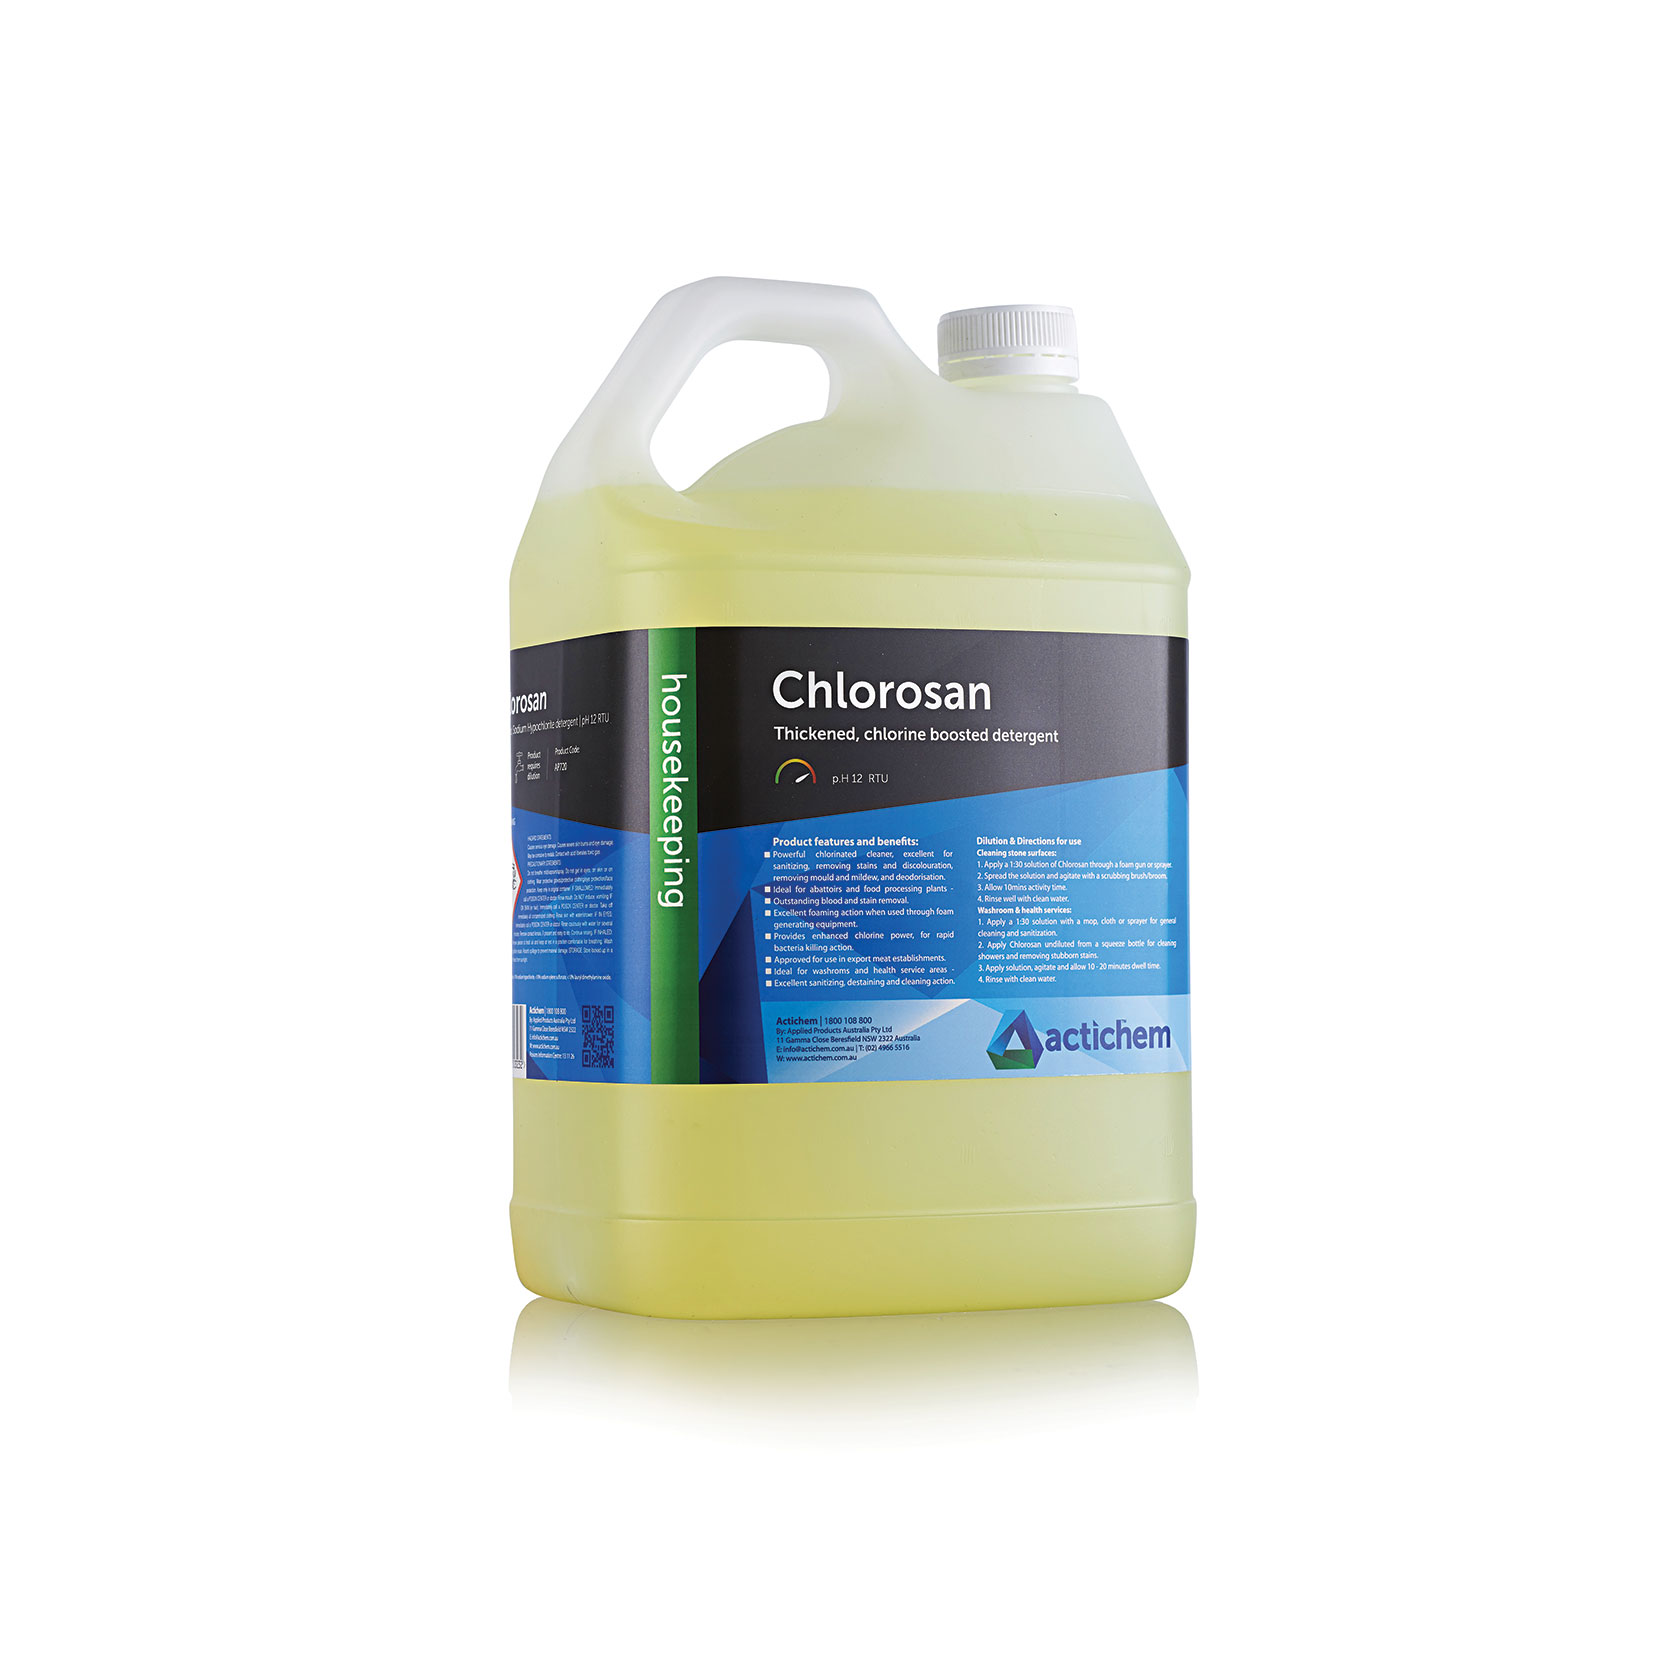 Actichem Chloroosan Thickened chlorine detergent & disinfectant